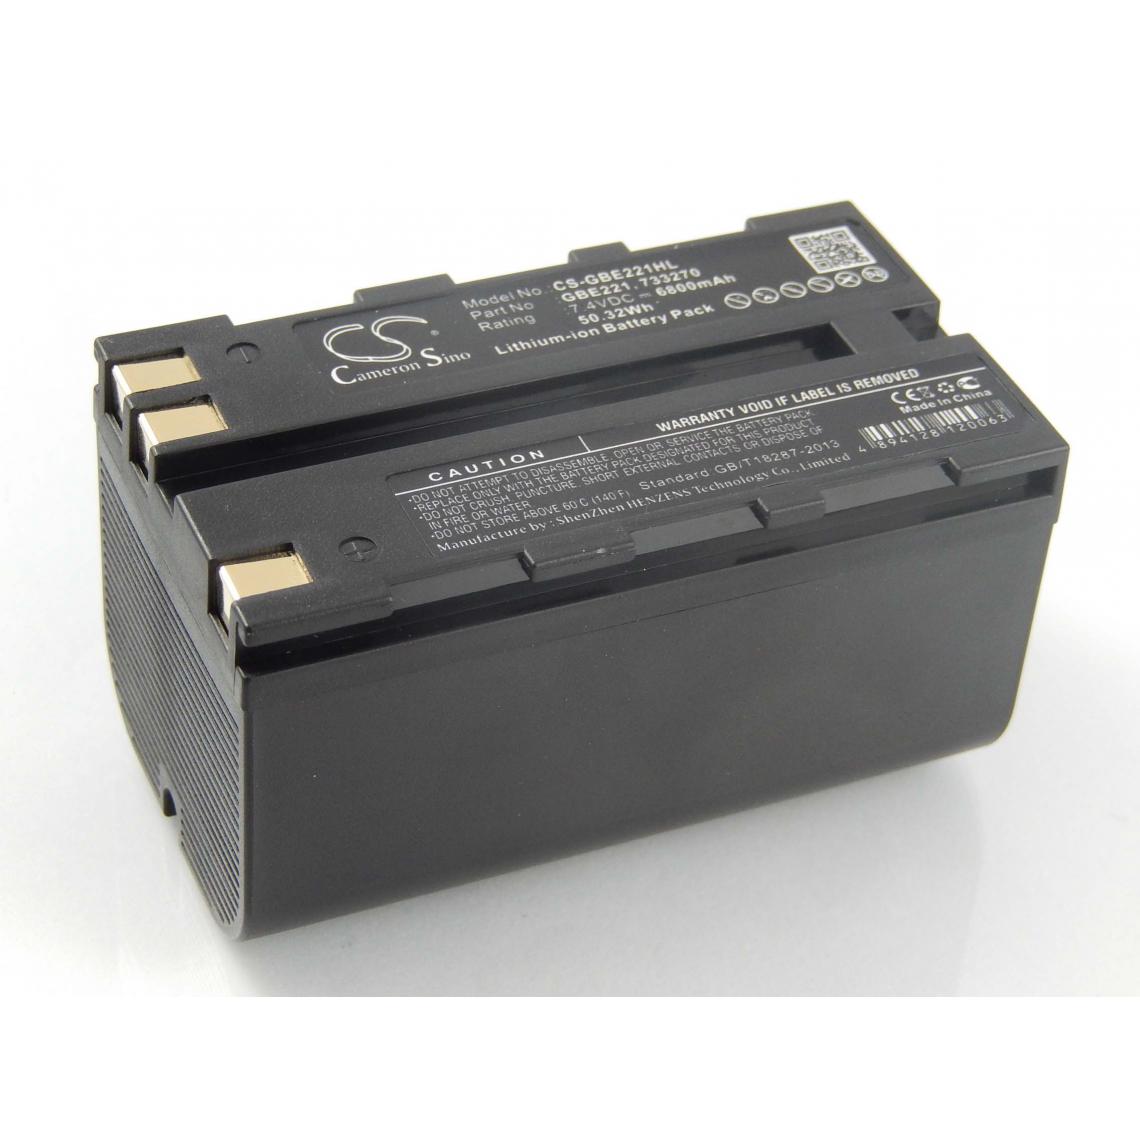 Vhbw - vhbw Batterie compatible avec Leica SR20, SR500, SR510, SR520 dispositif de mesure laser, outil de mesure (6800mAh, 7,4V, Li-ion) - Piles rechargeables